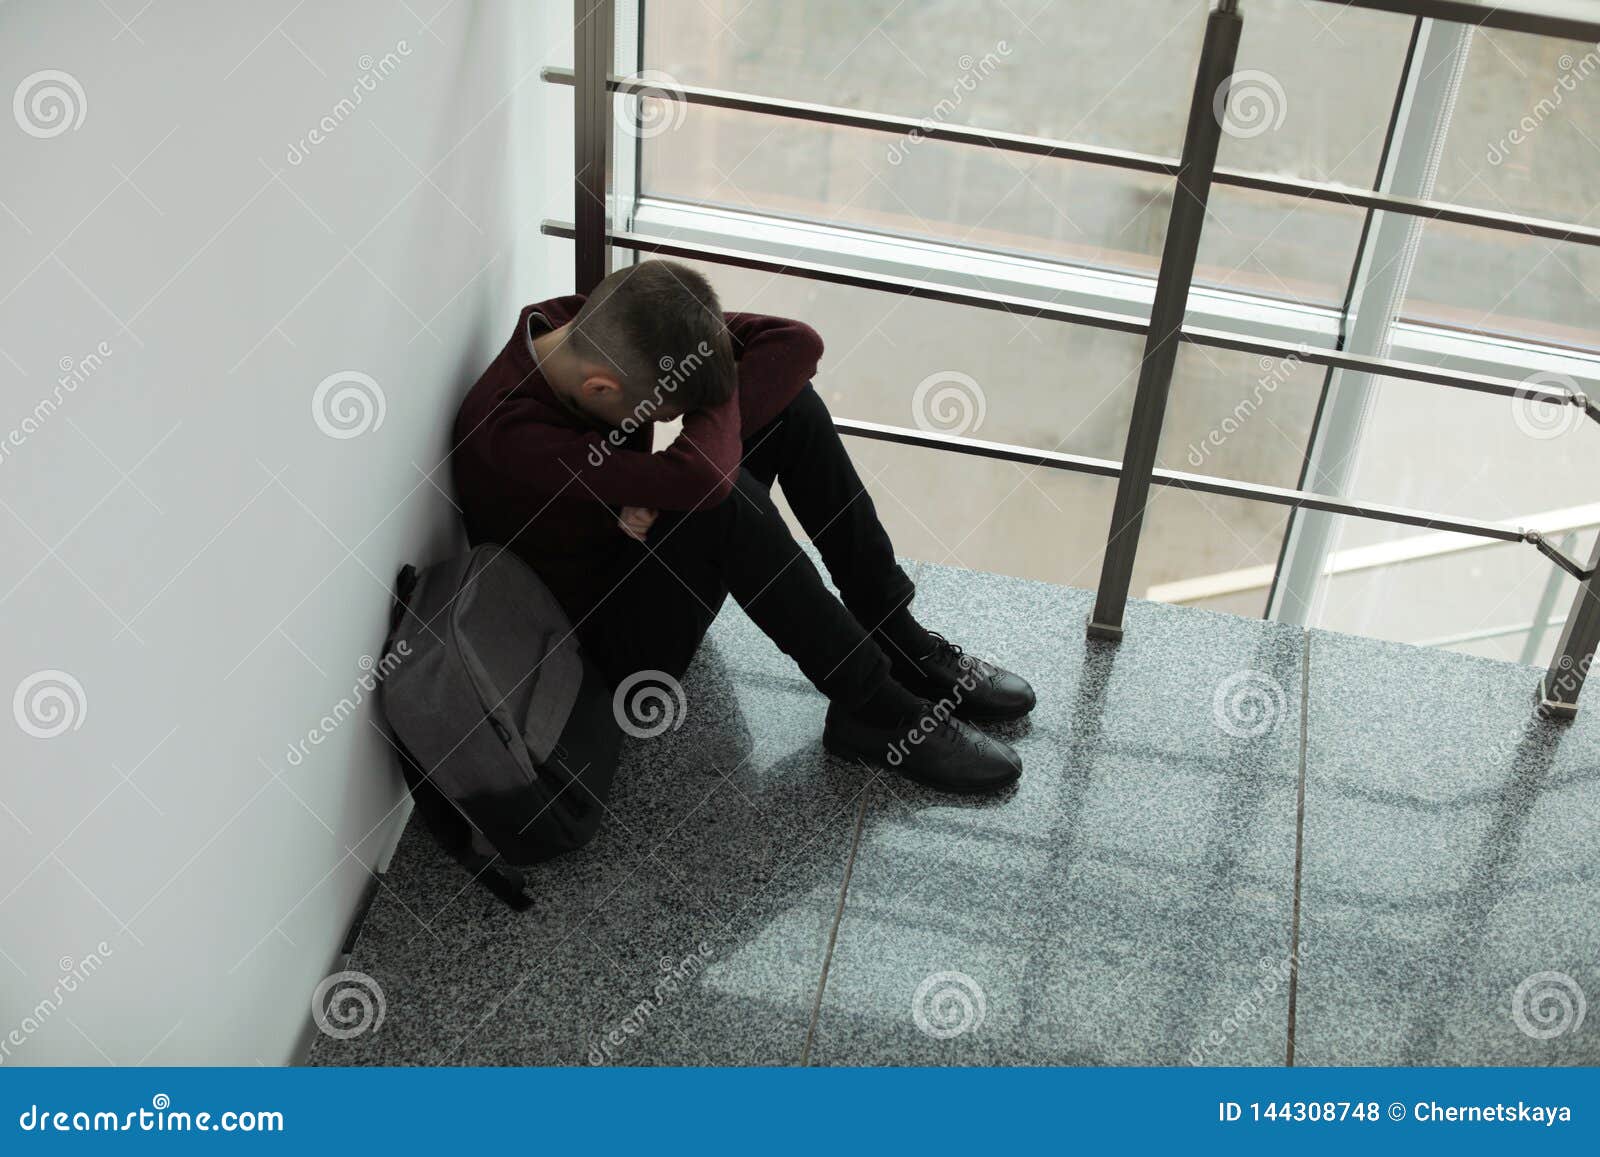 upset boy with backpack sitting near window indoors